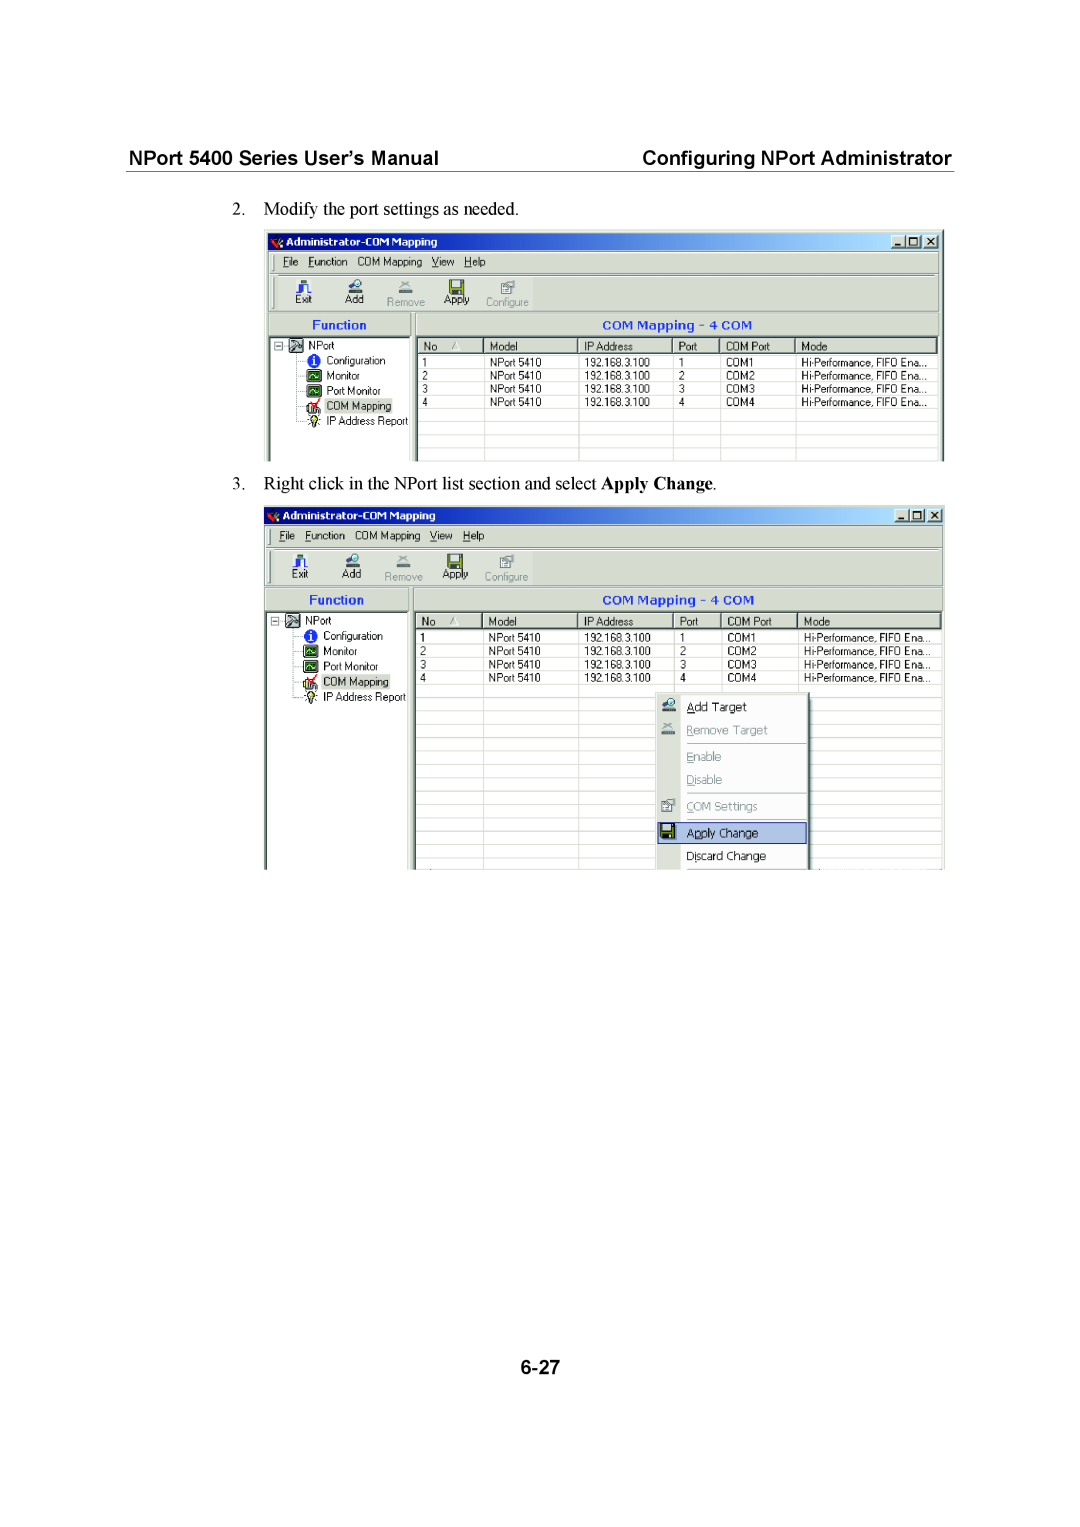 Moxa Technologies user manual NPort 5400 Series User’s Manual, Configuring NPort Administrator, 6-27 